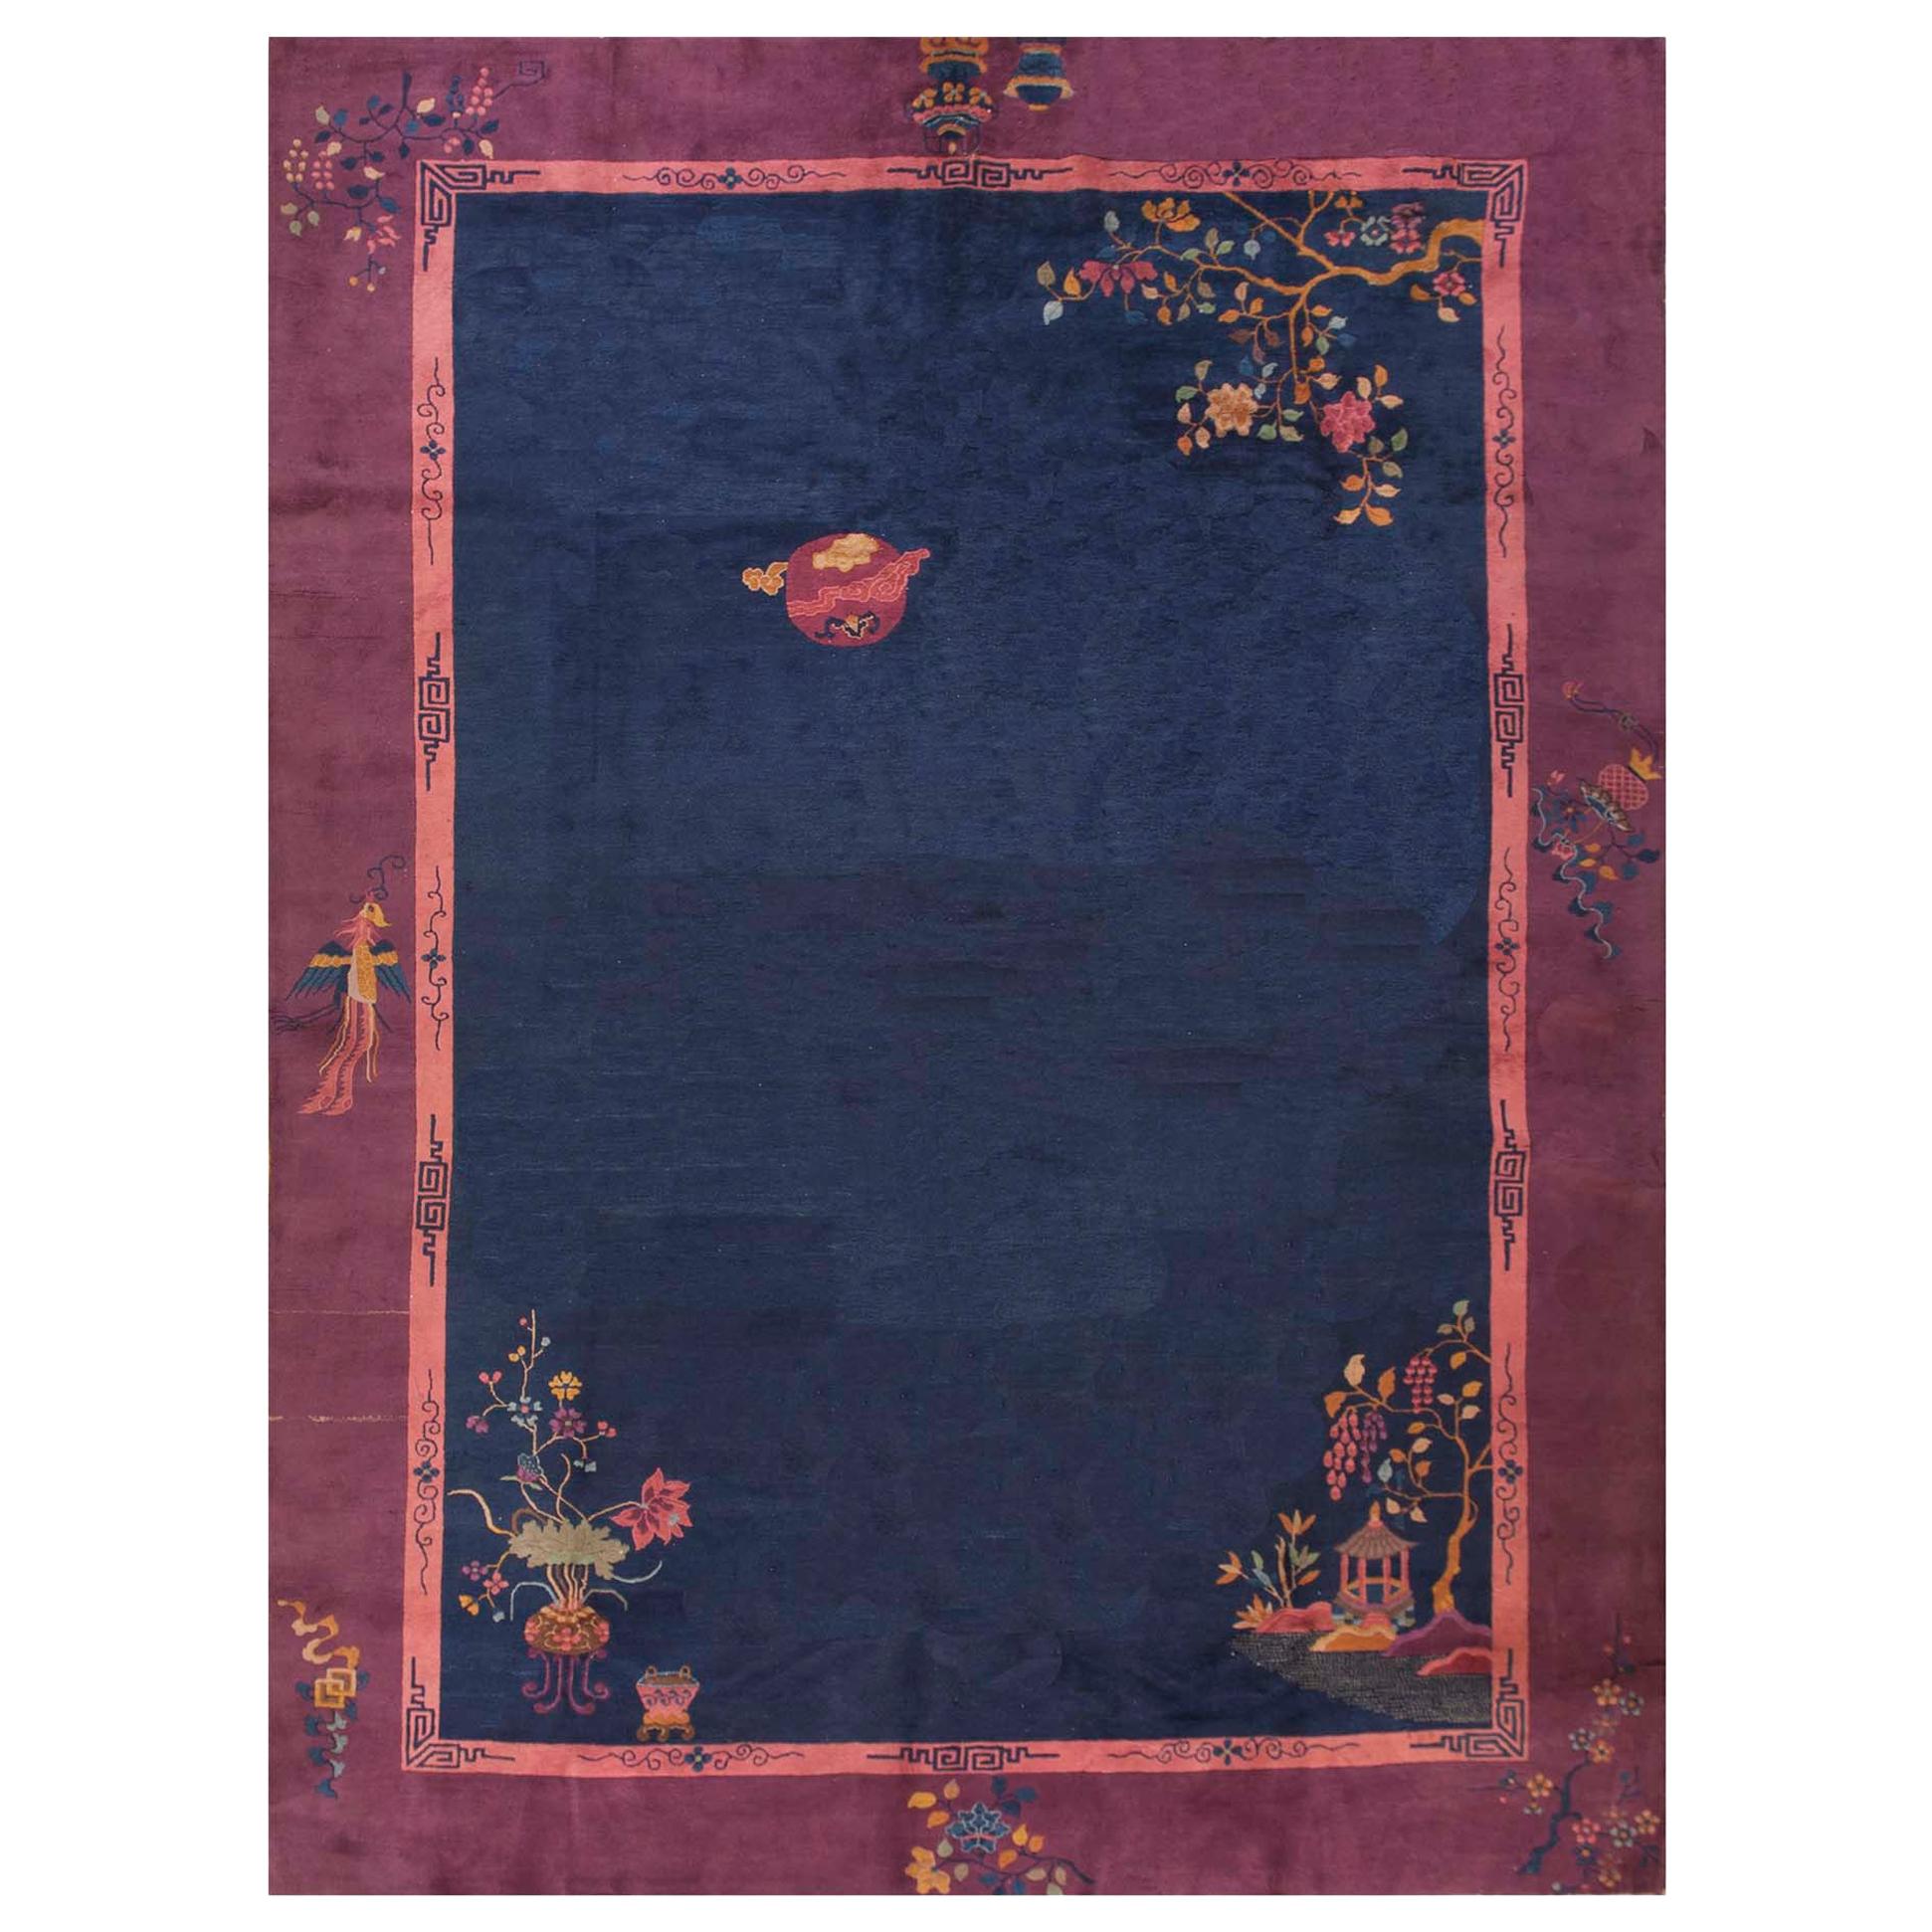 1920s Chinese Art Deco Carpet ( 9'10" x 13'6" - 300 x 412 )